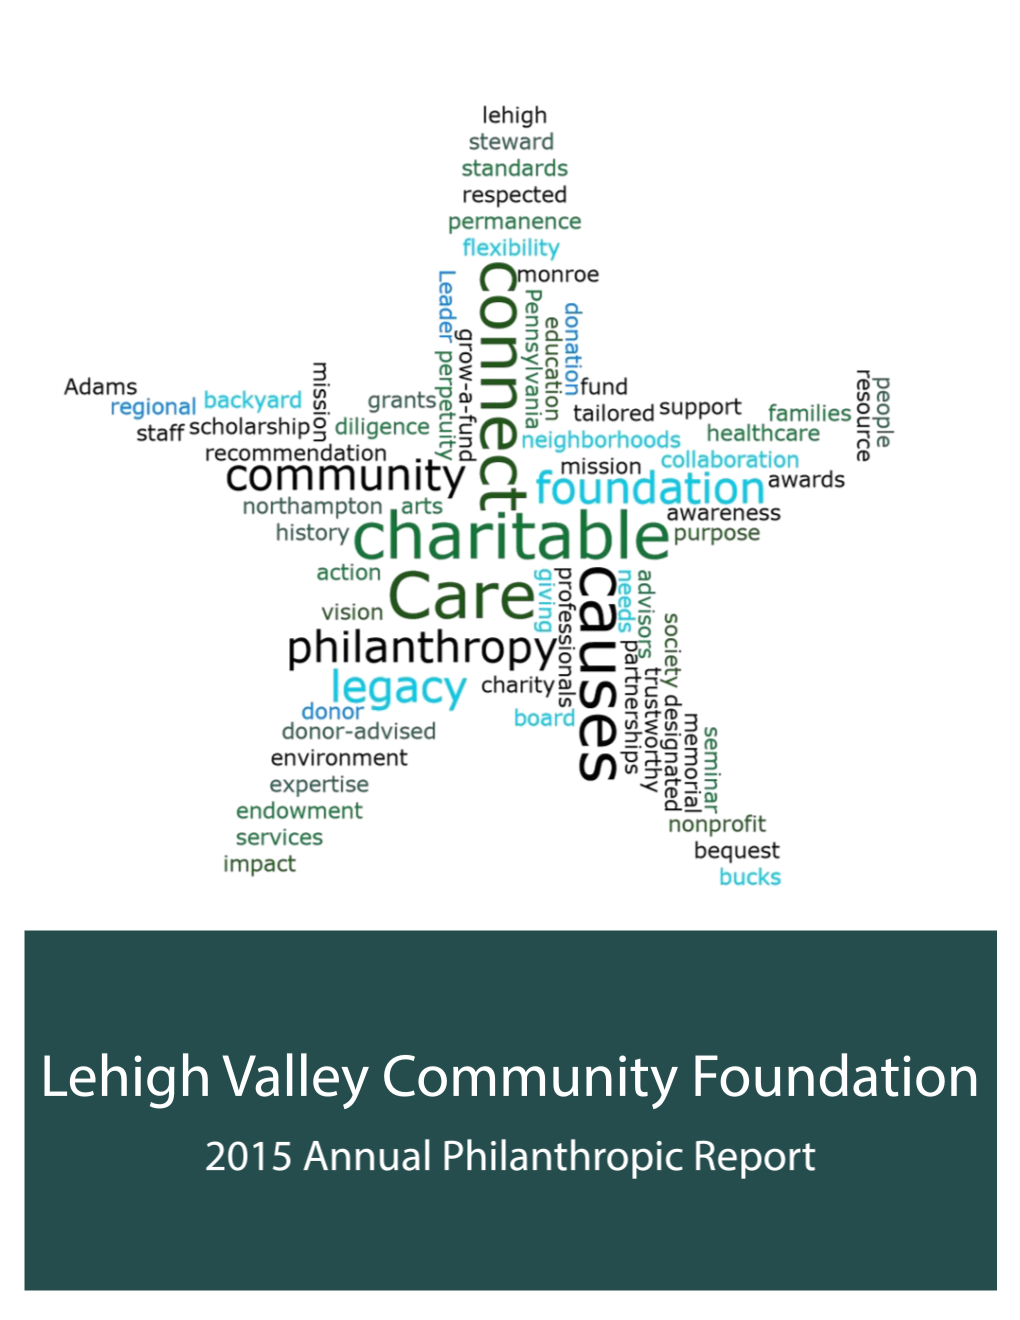 The Lehigh Valley Community Foundation